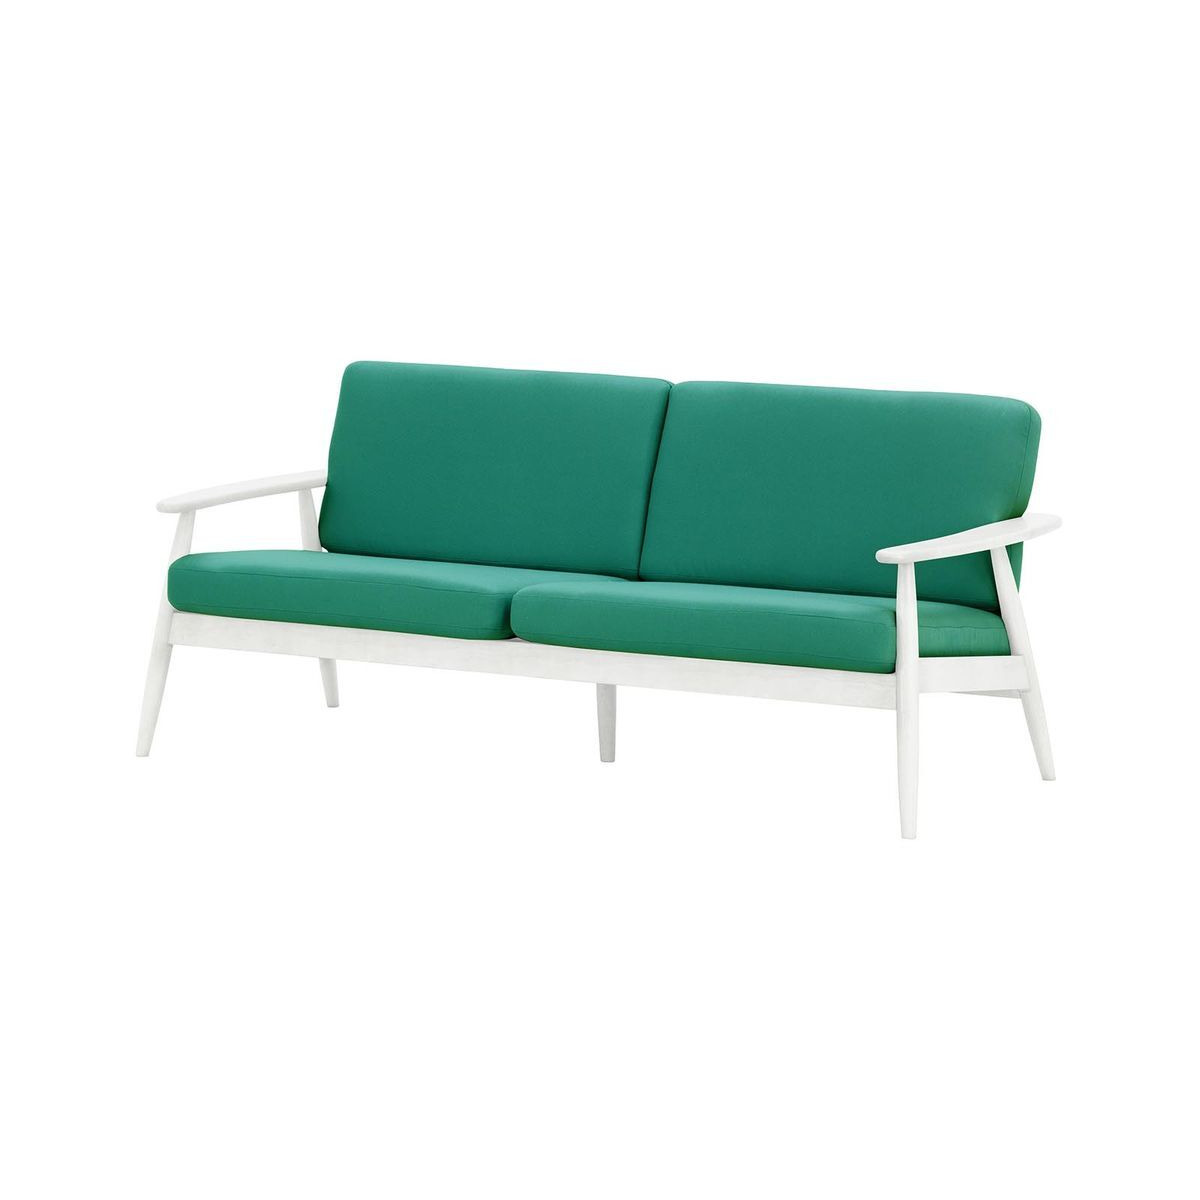 Demure Aqua 3 Seater Garden Sofa, turquoise, Leg colour: 8035 white - image 1